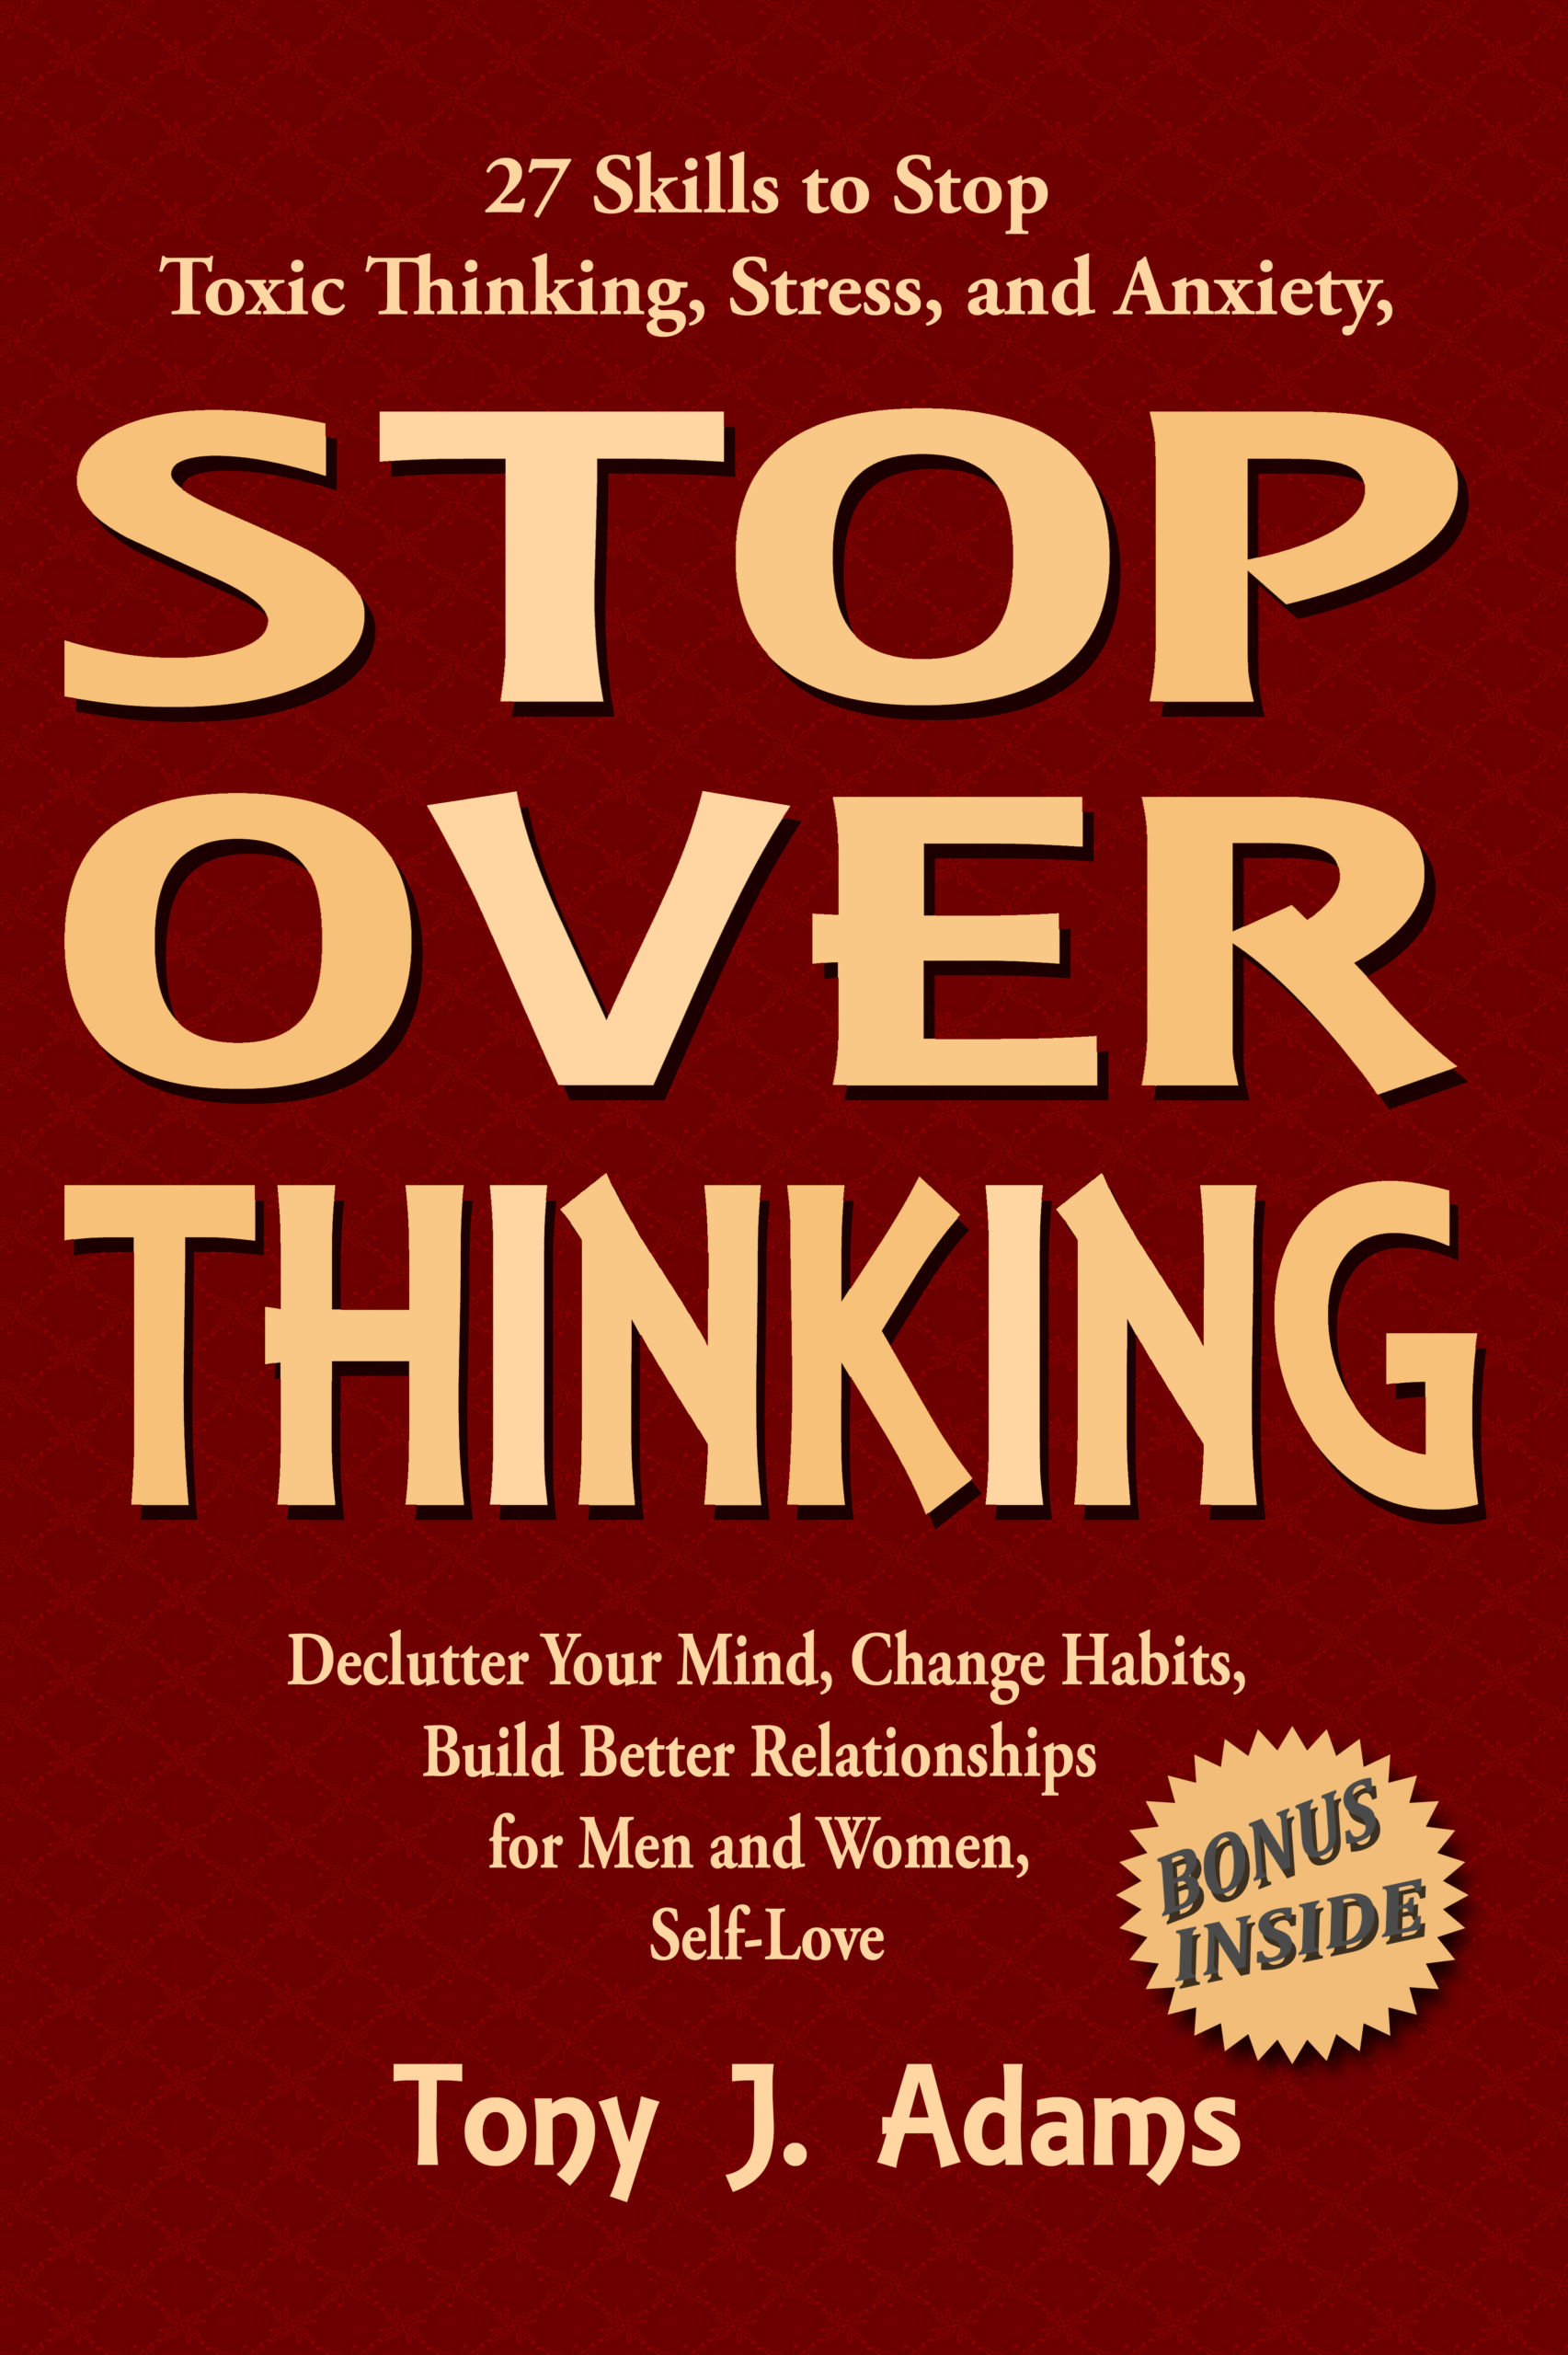 STOP OVERTHINKING AND RUMINATING